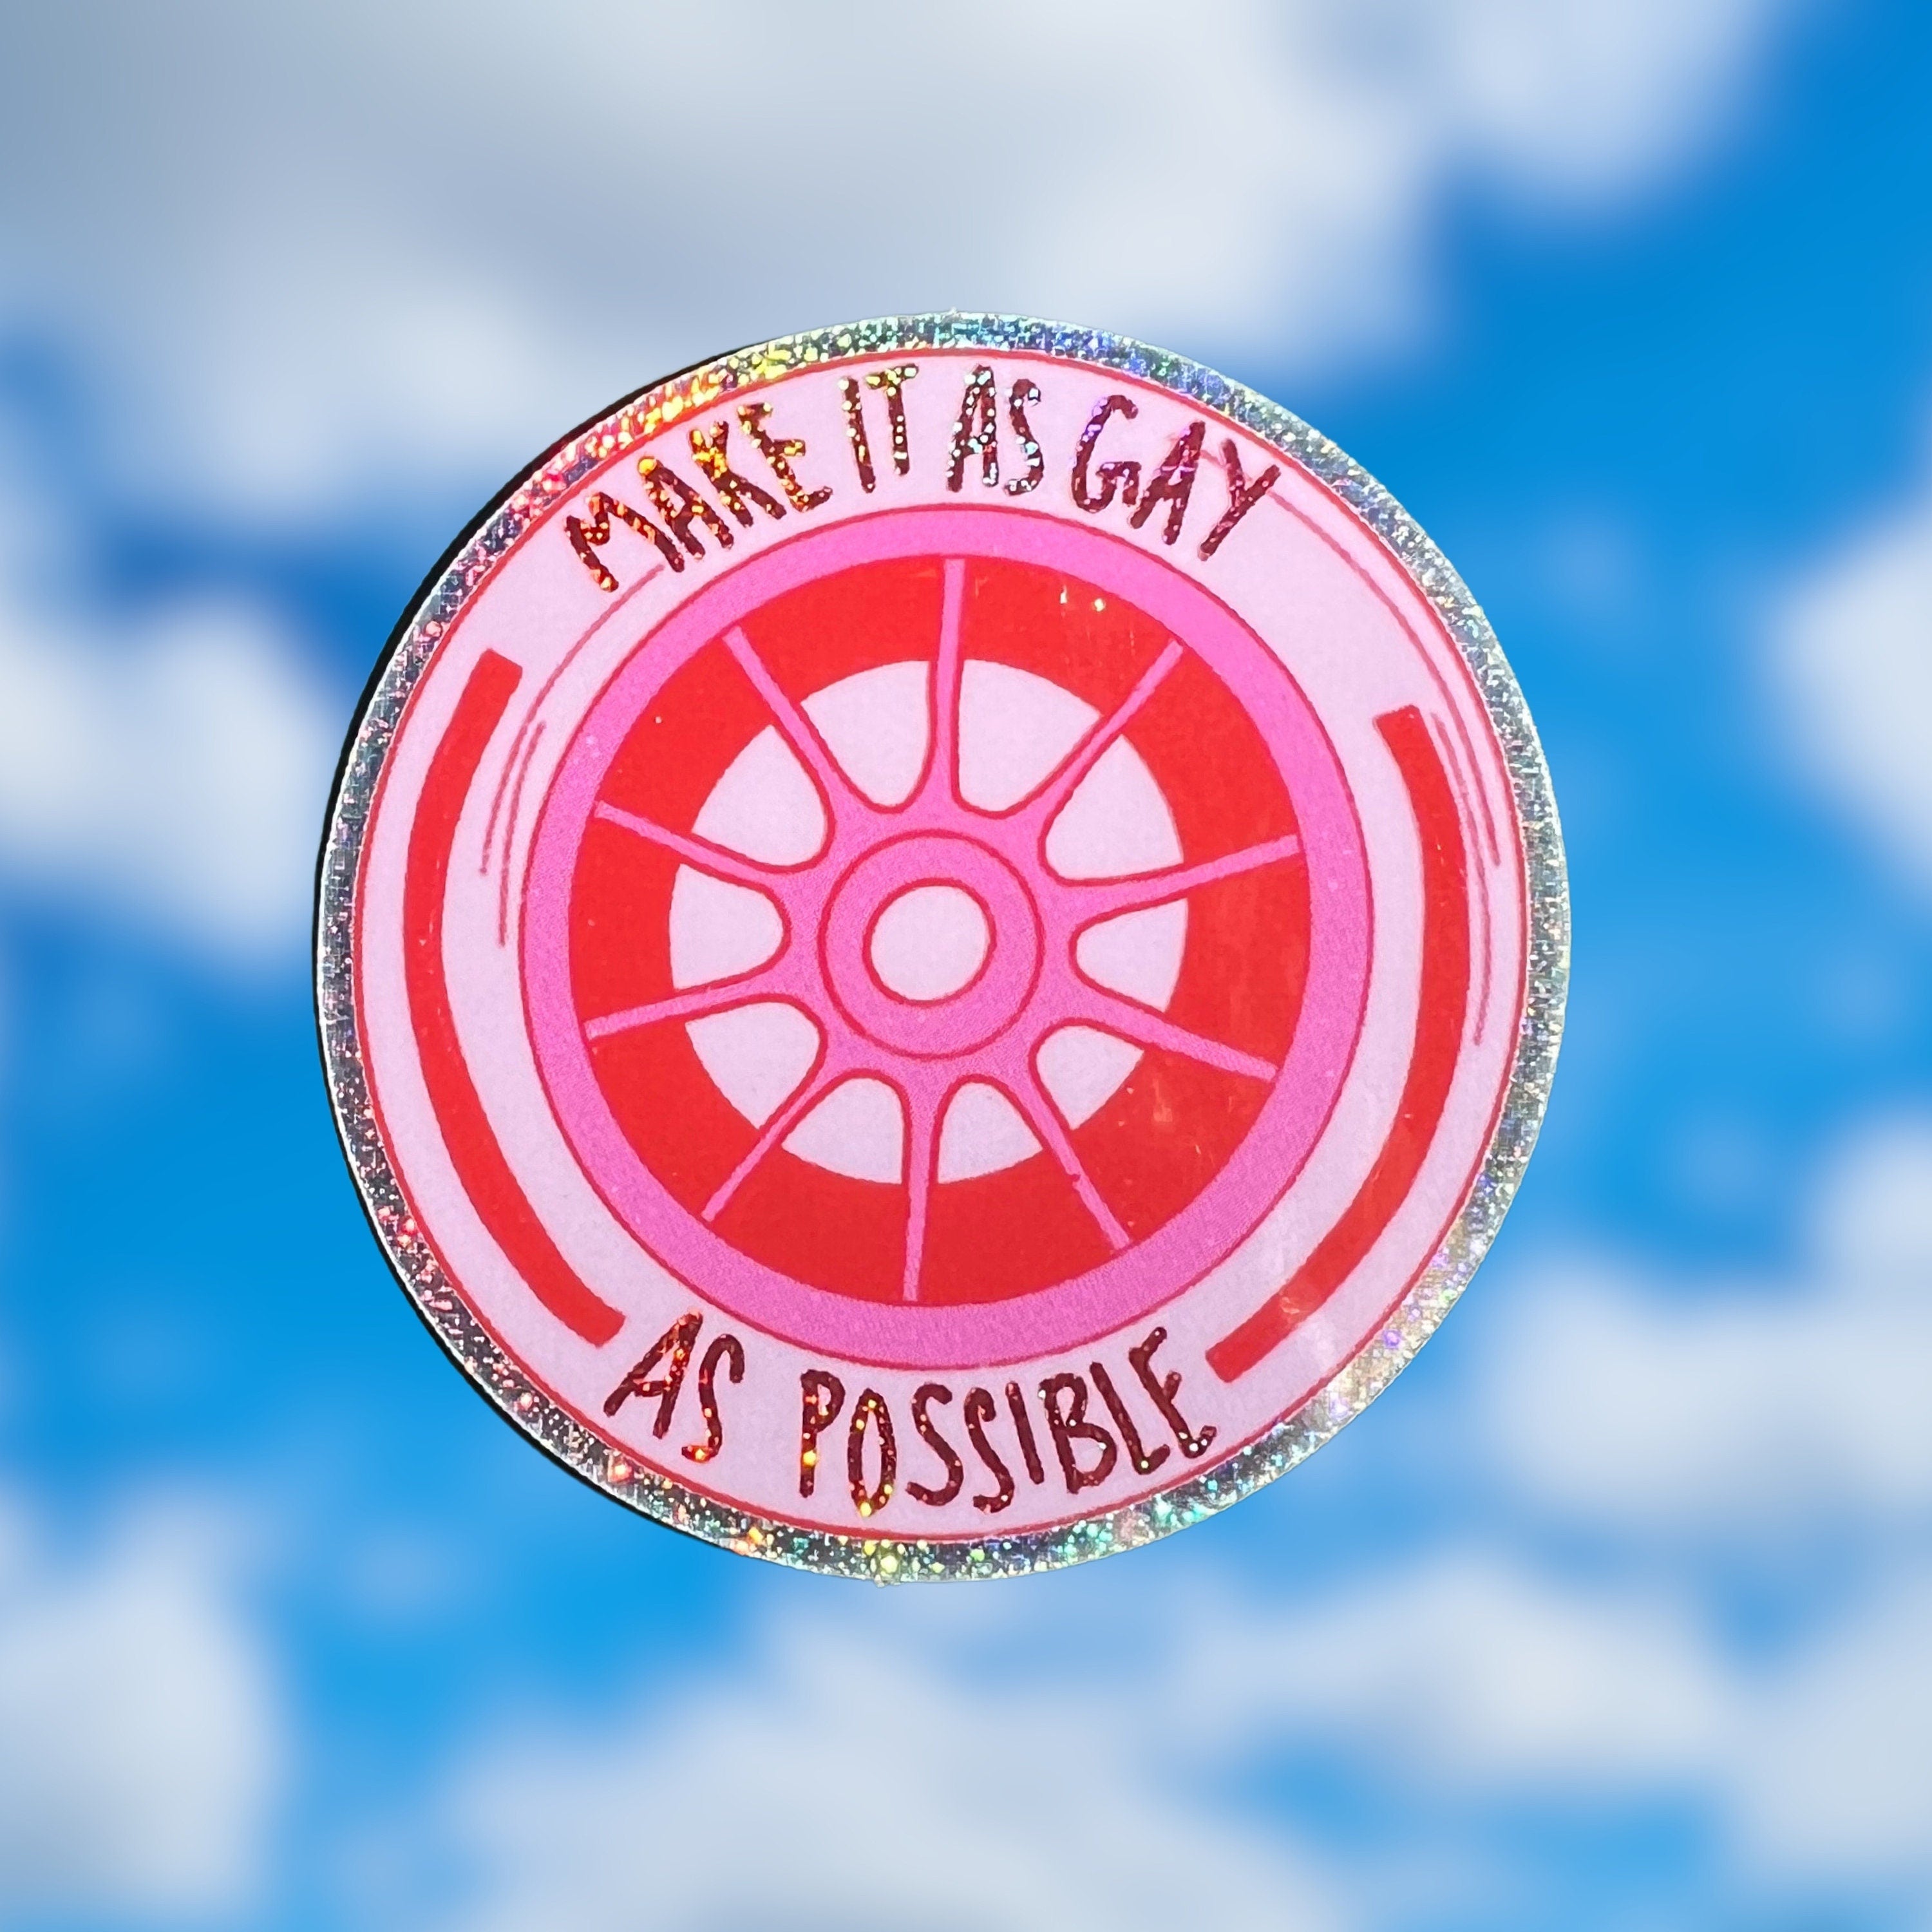 "Make It Gay" sticker